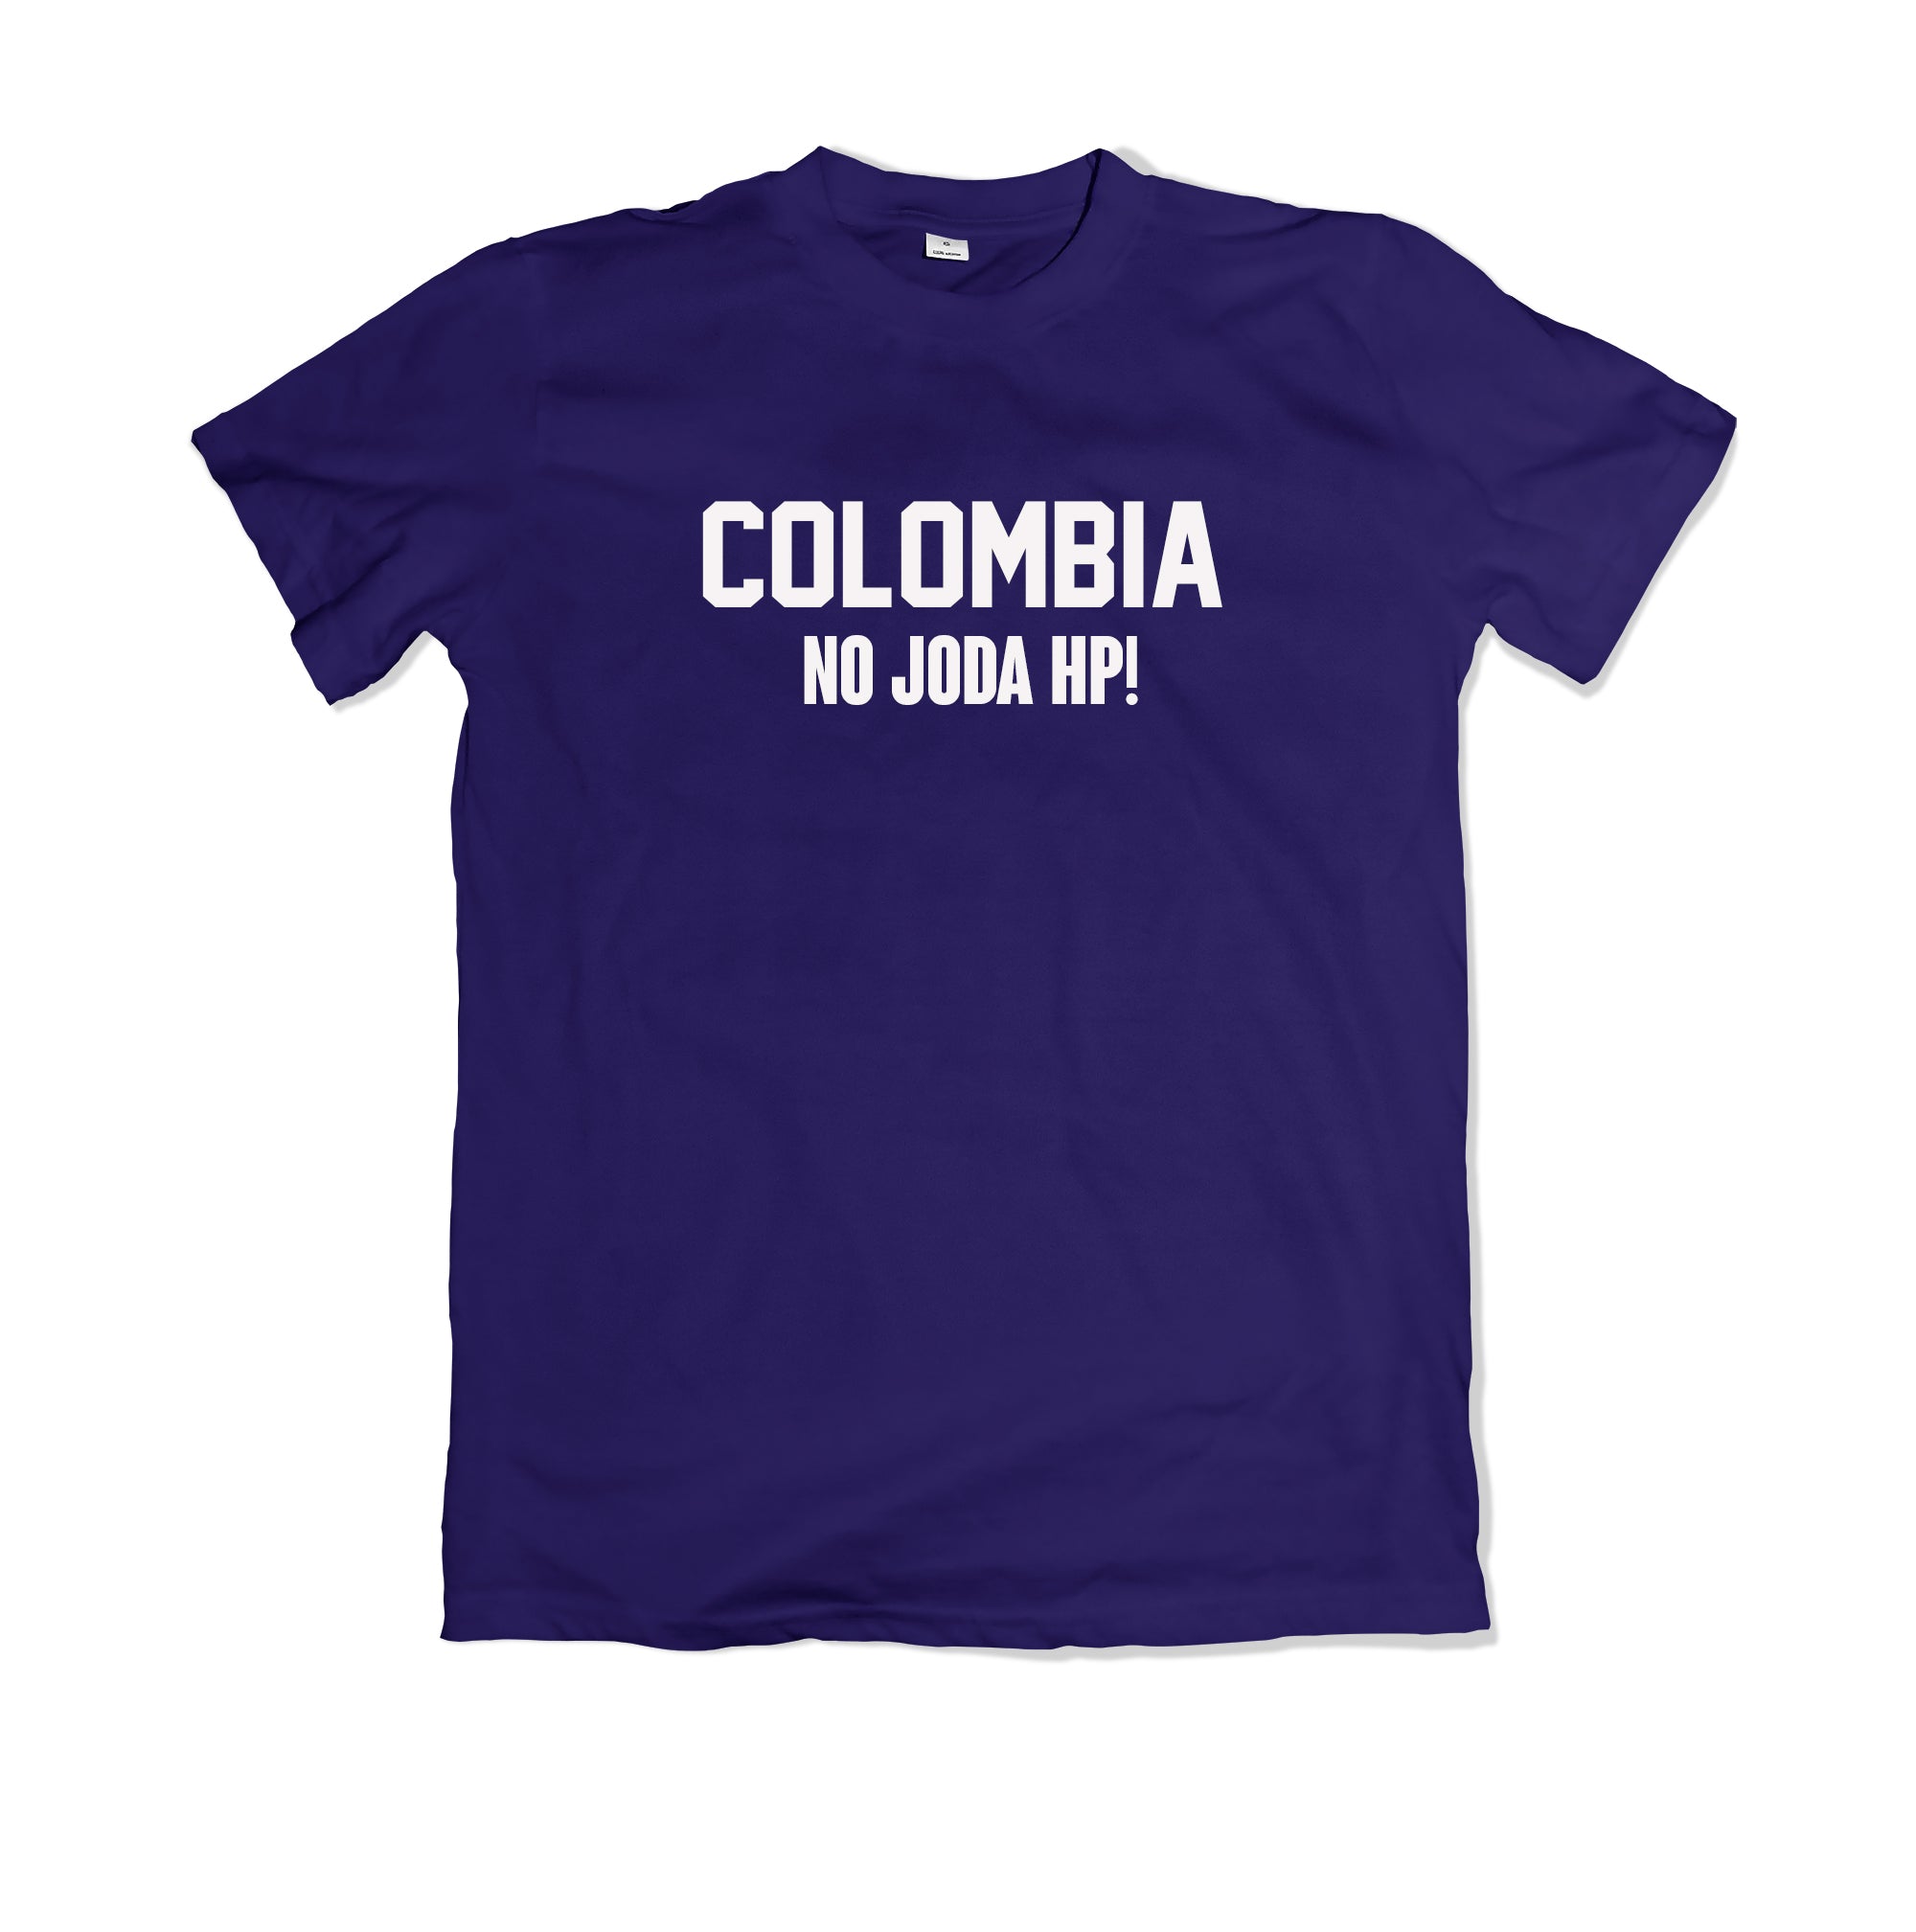 Colombia No Joda T-SHIRT - TOPS, TSS CUSTOM GRPHX, SNEAKER STUDIO, GOLDEN GILT, DESIGN BY TSS